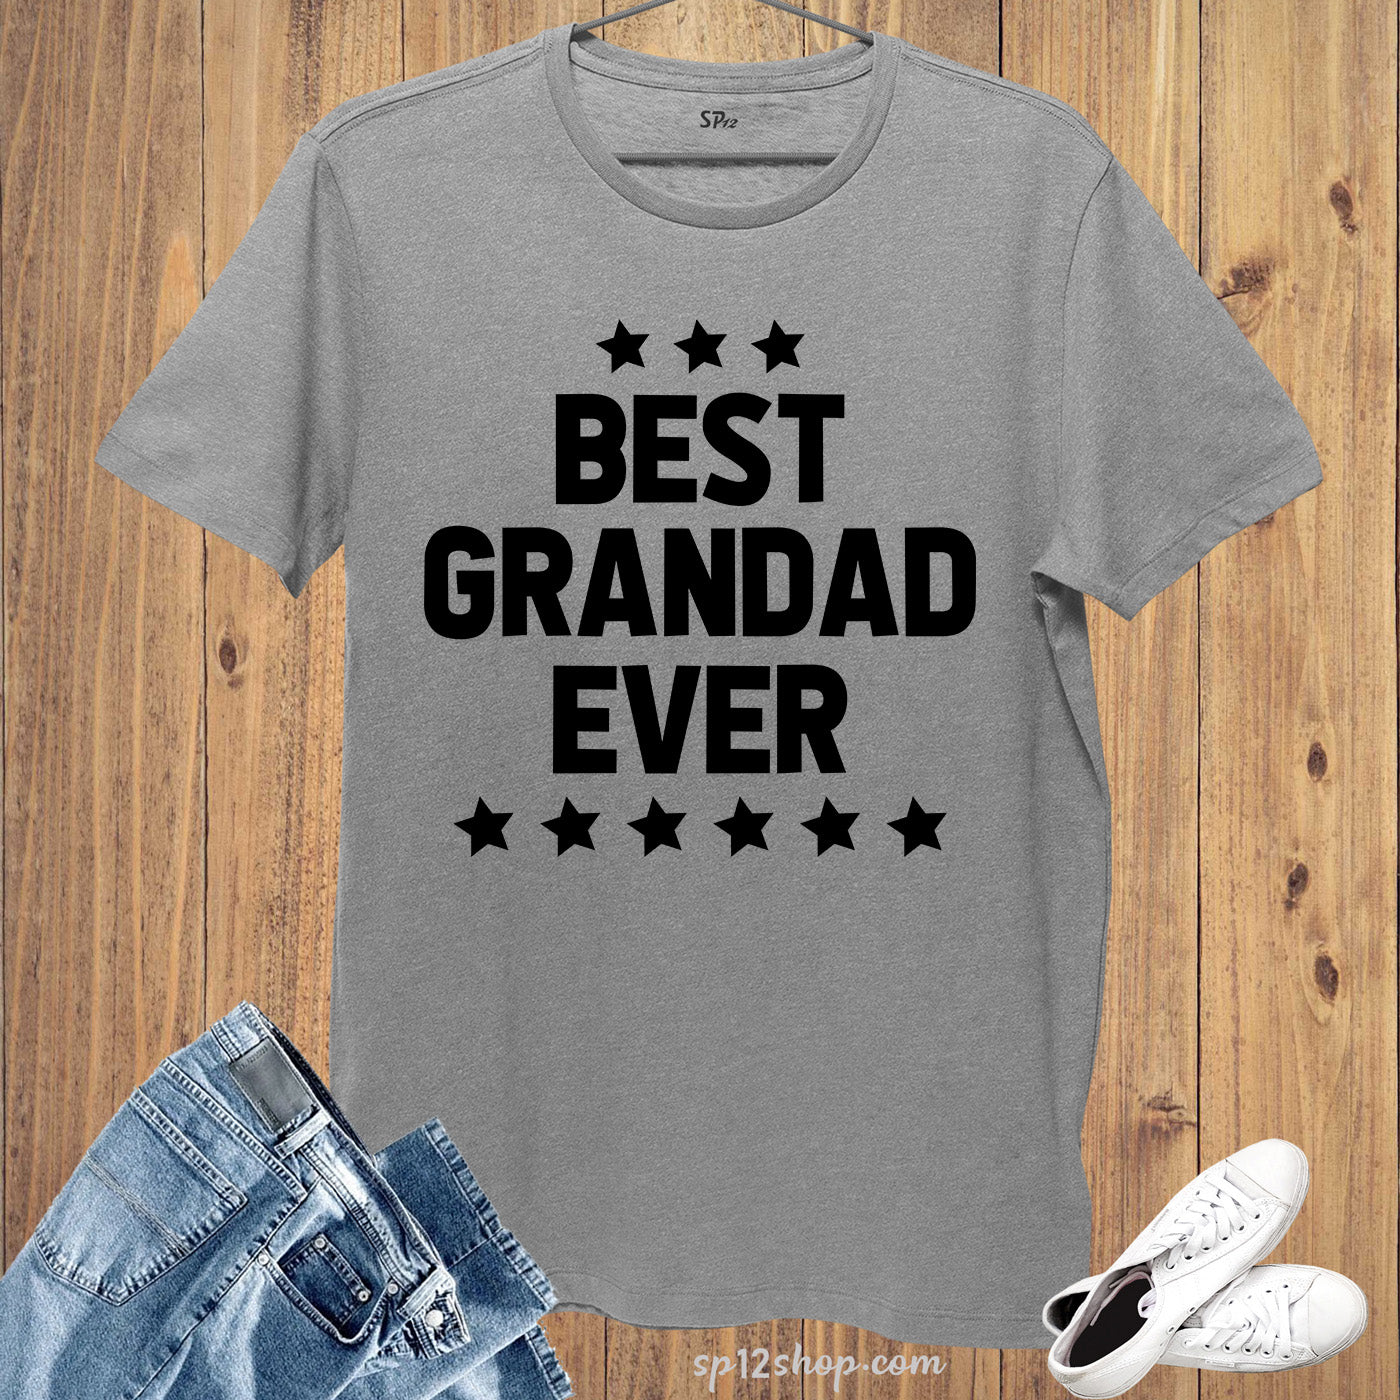 Best Grandad Ever T Shirts